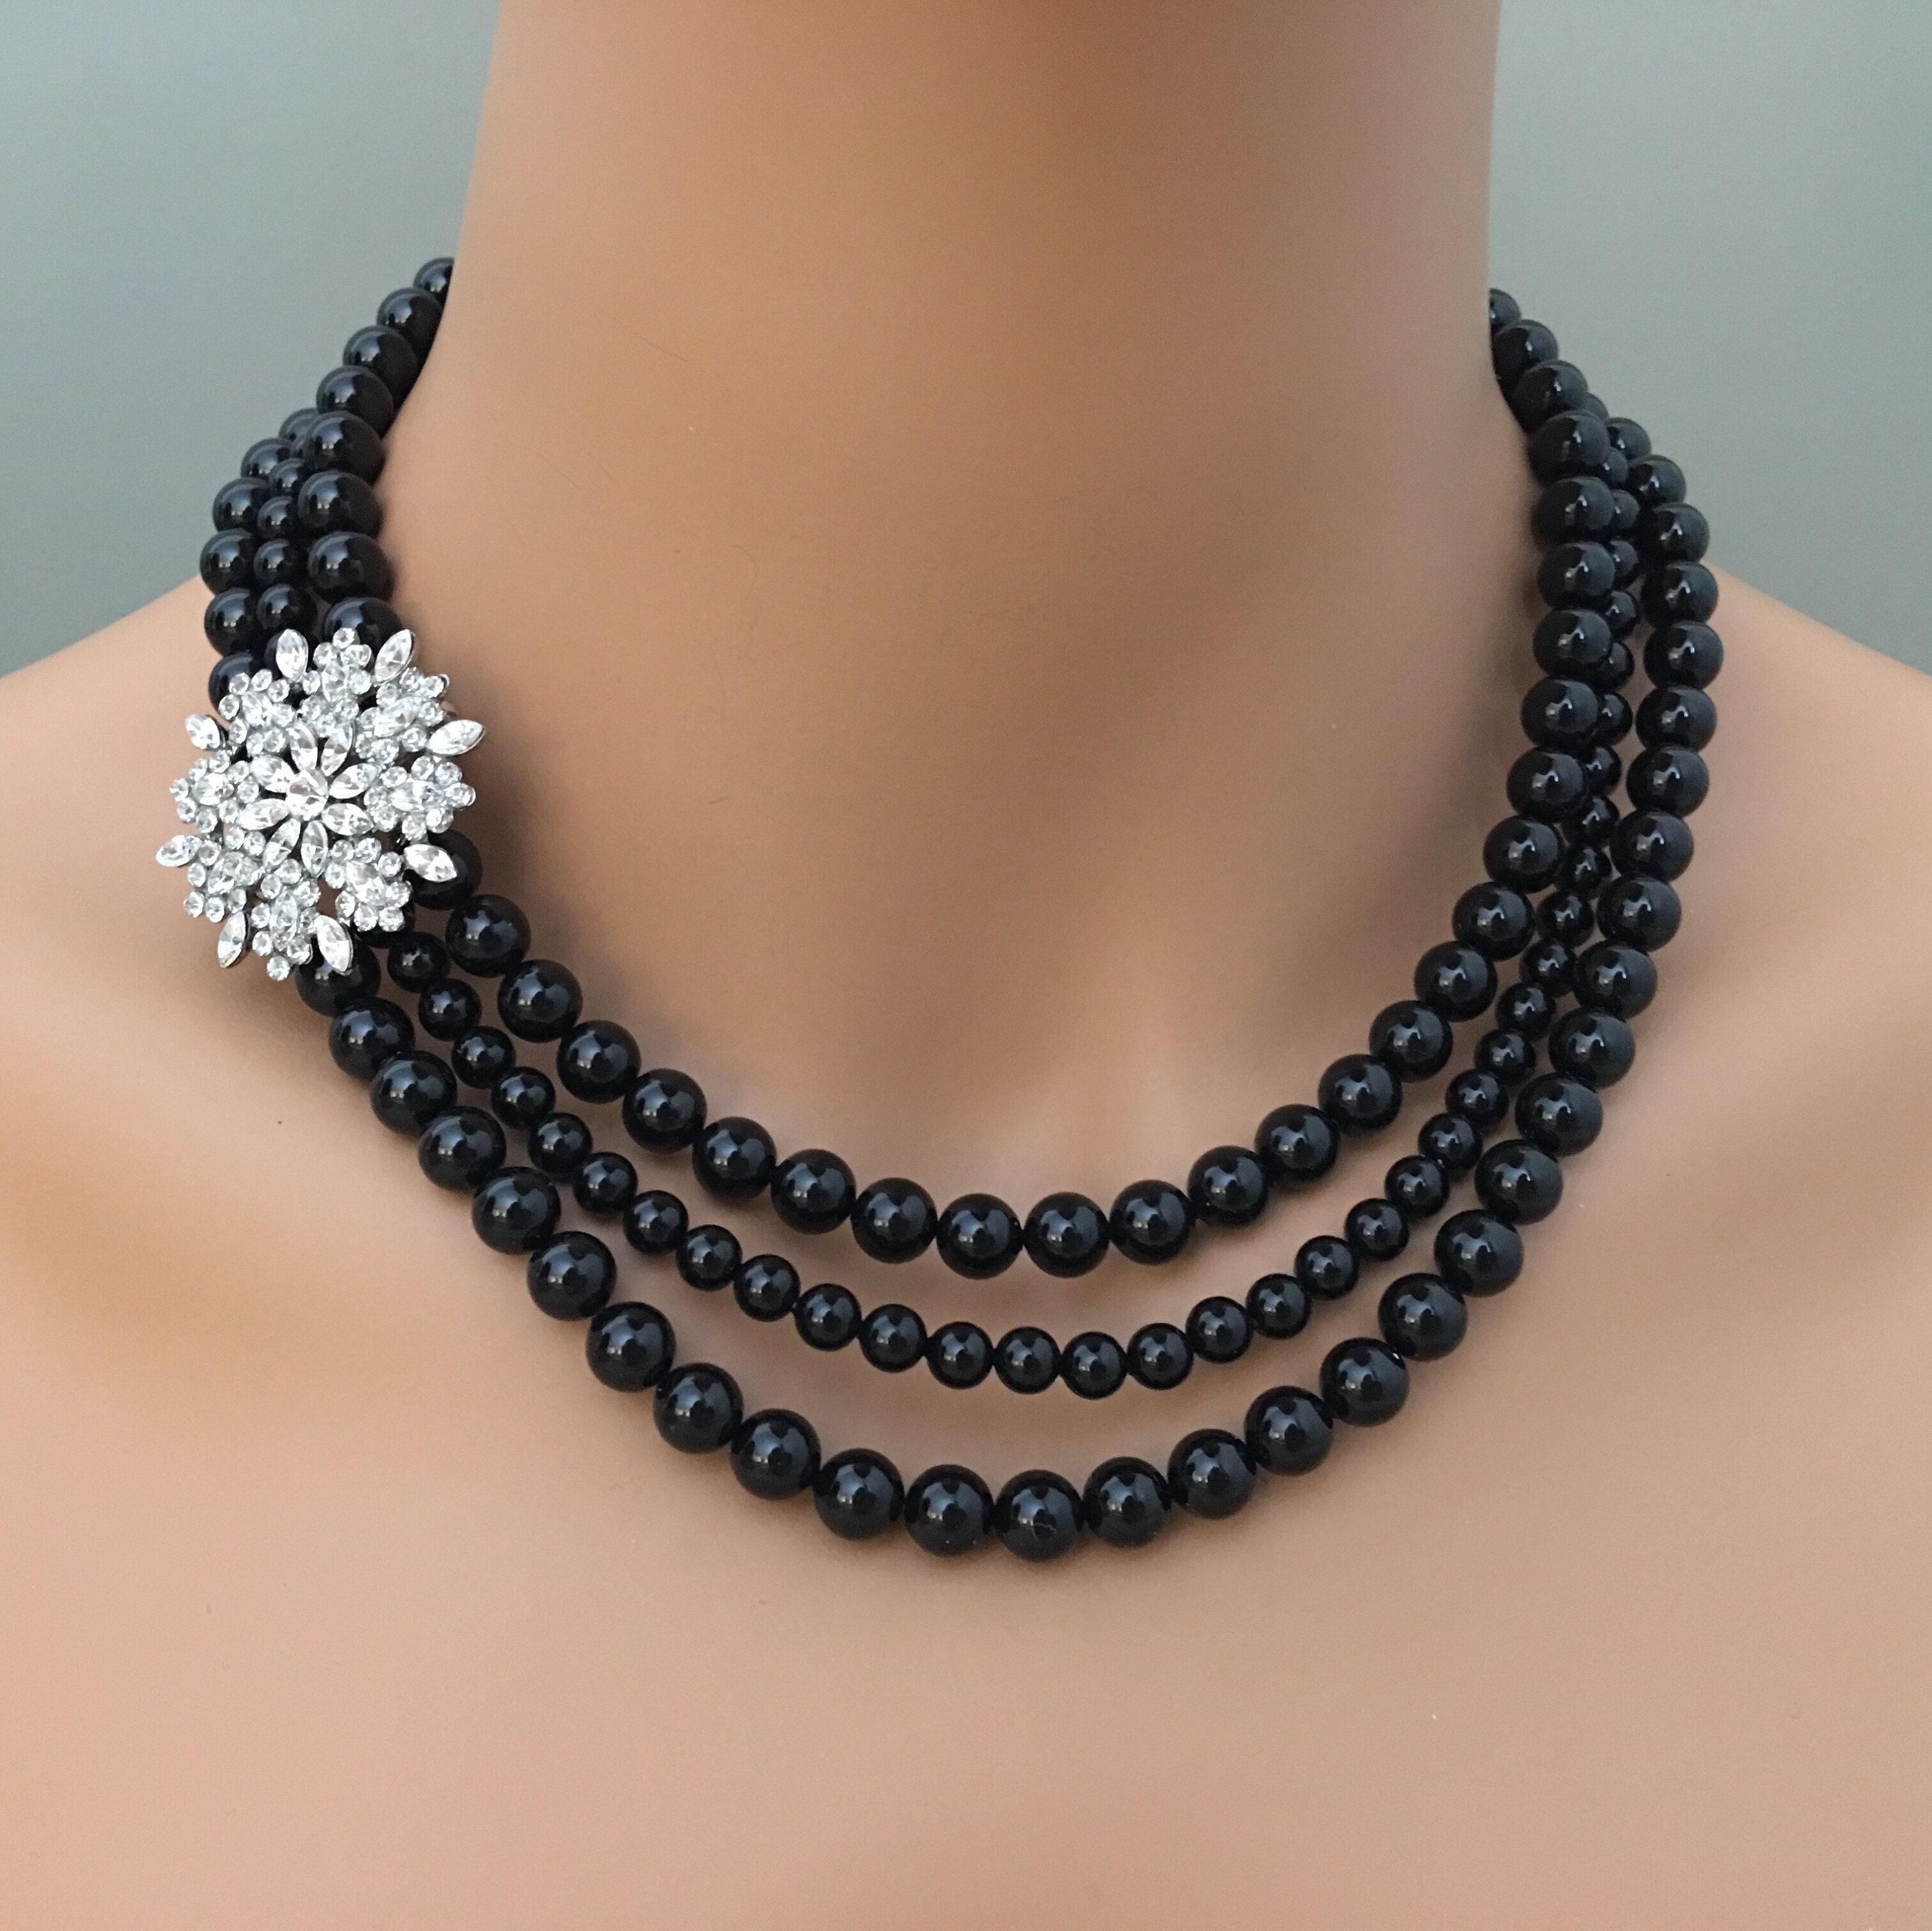 Affordable Tahitian Black Pearl Jewelry | Orientalpearls.net